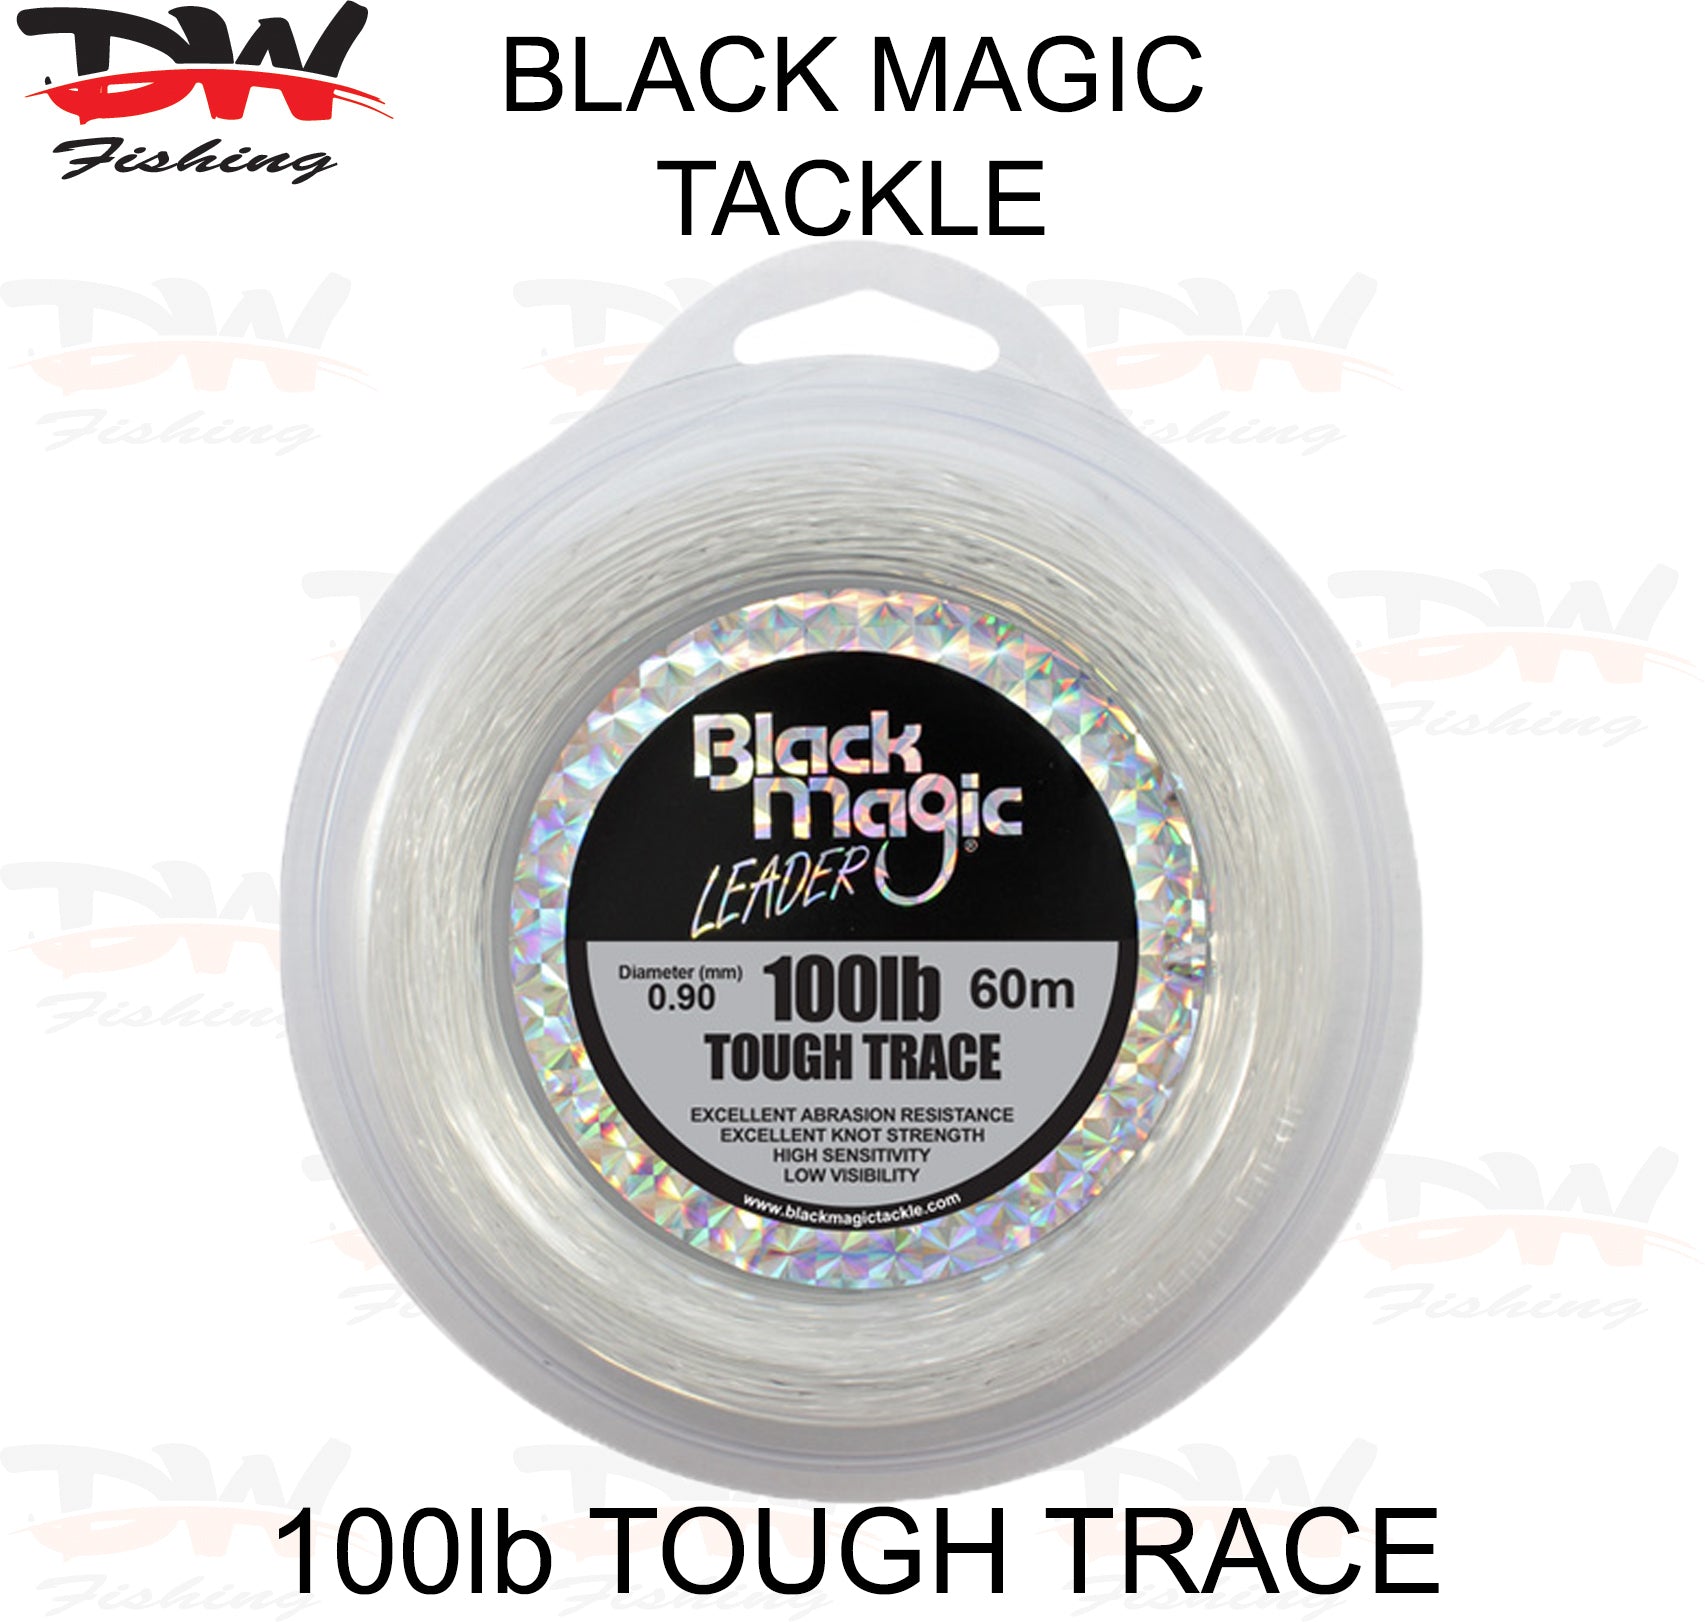 Black Magic Tackle Tough Trace 100lb